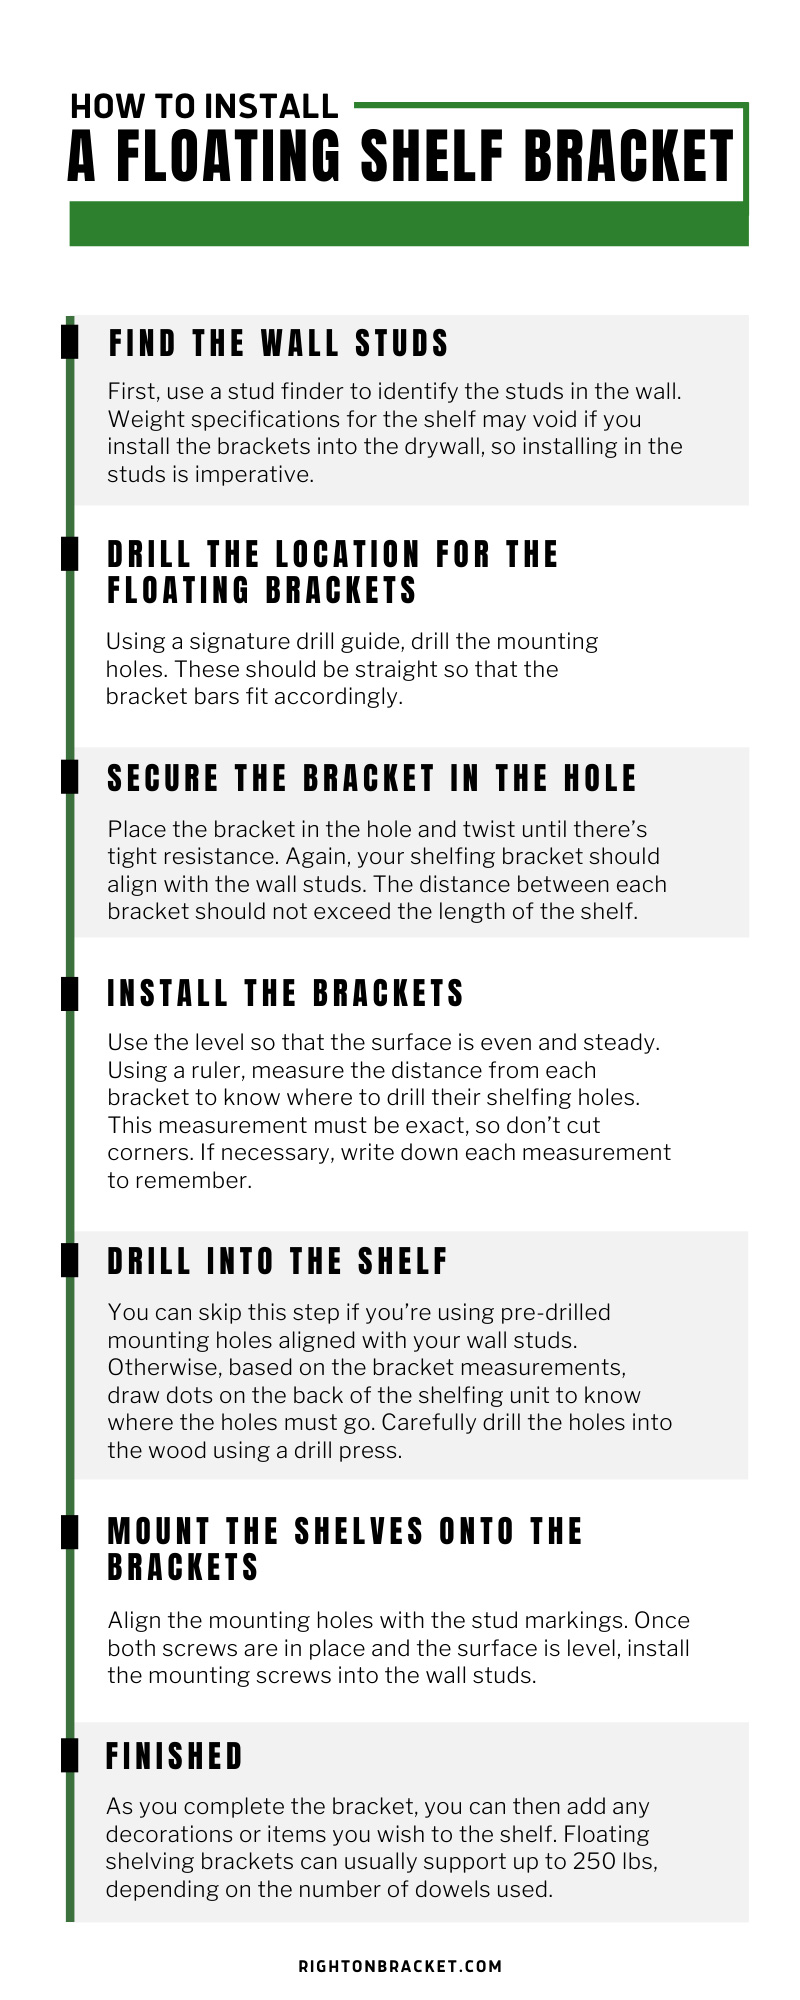 How to Install a Floating Shelf Bracket